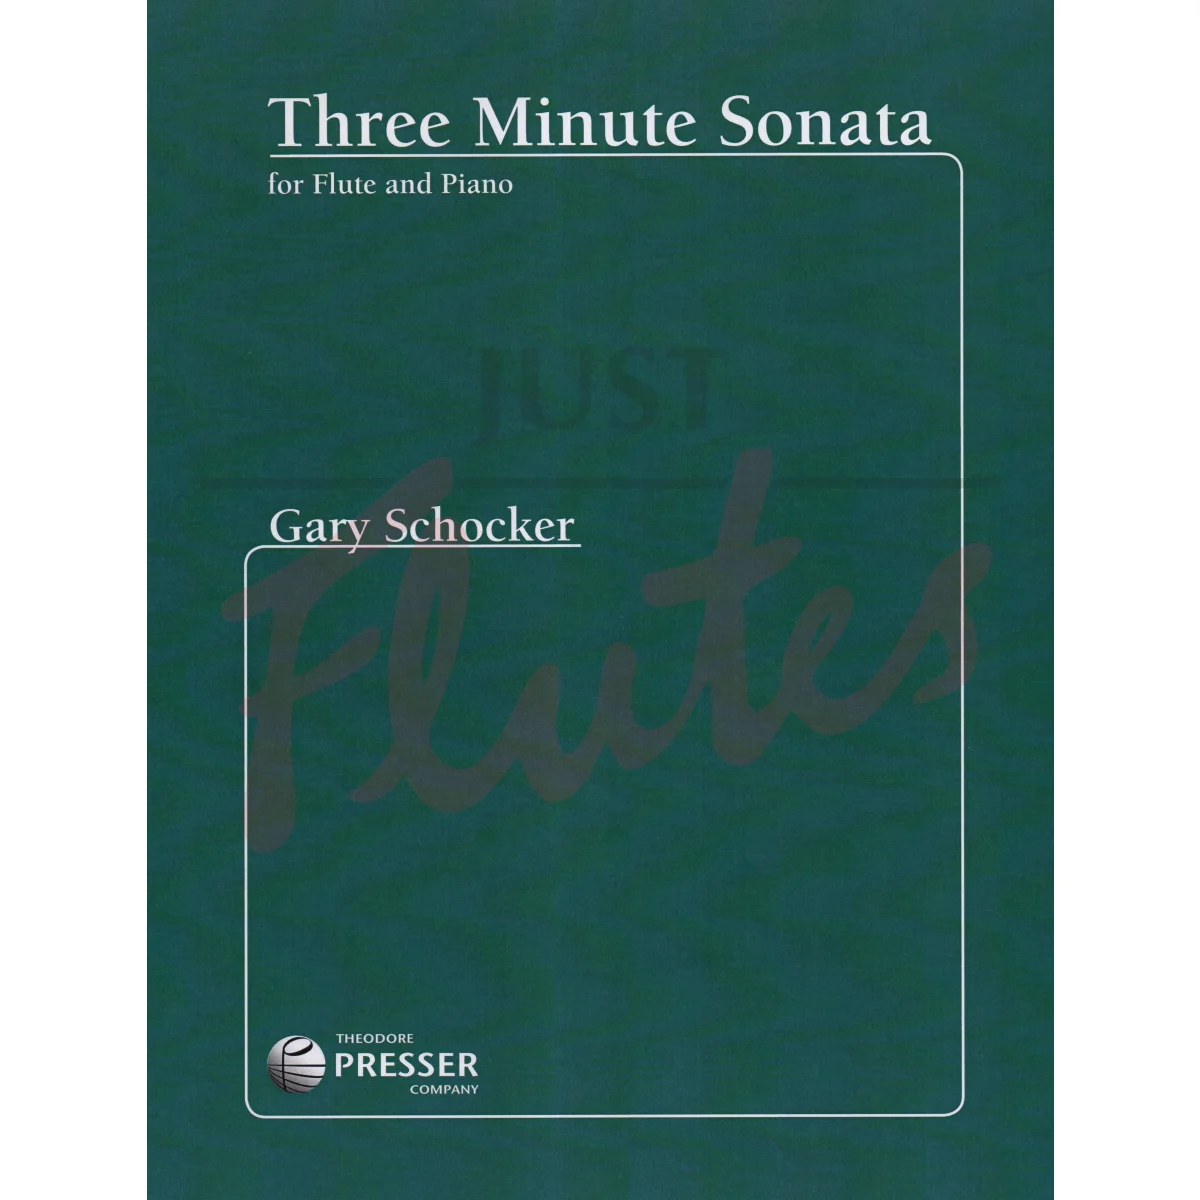 Three Minute Sonata for Flute and Piano